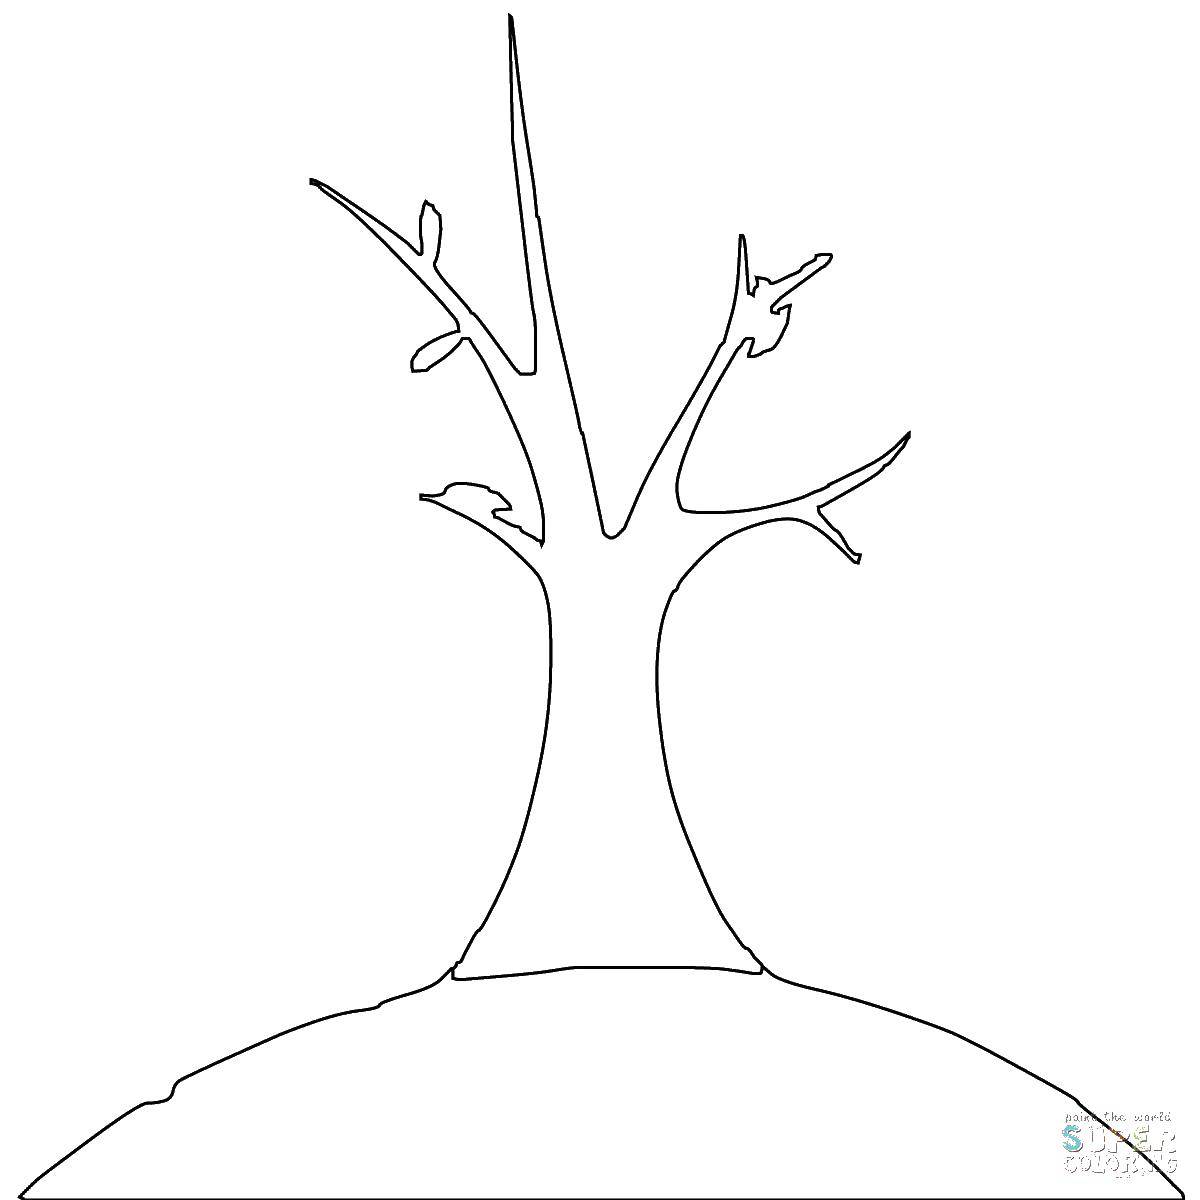 Название: Раскраска Дерево. Категория: Семейное дерево. Теги: дерево.